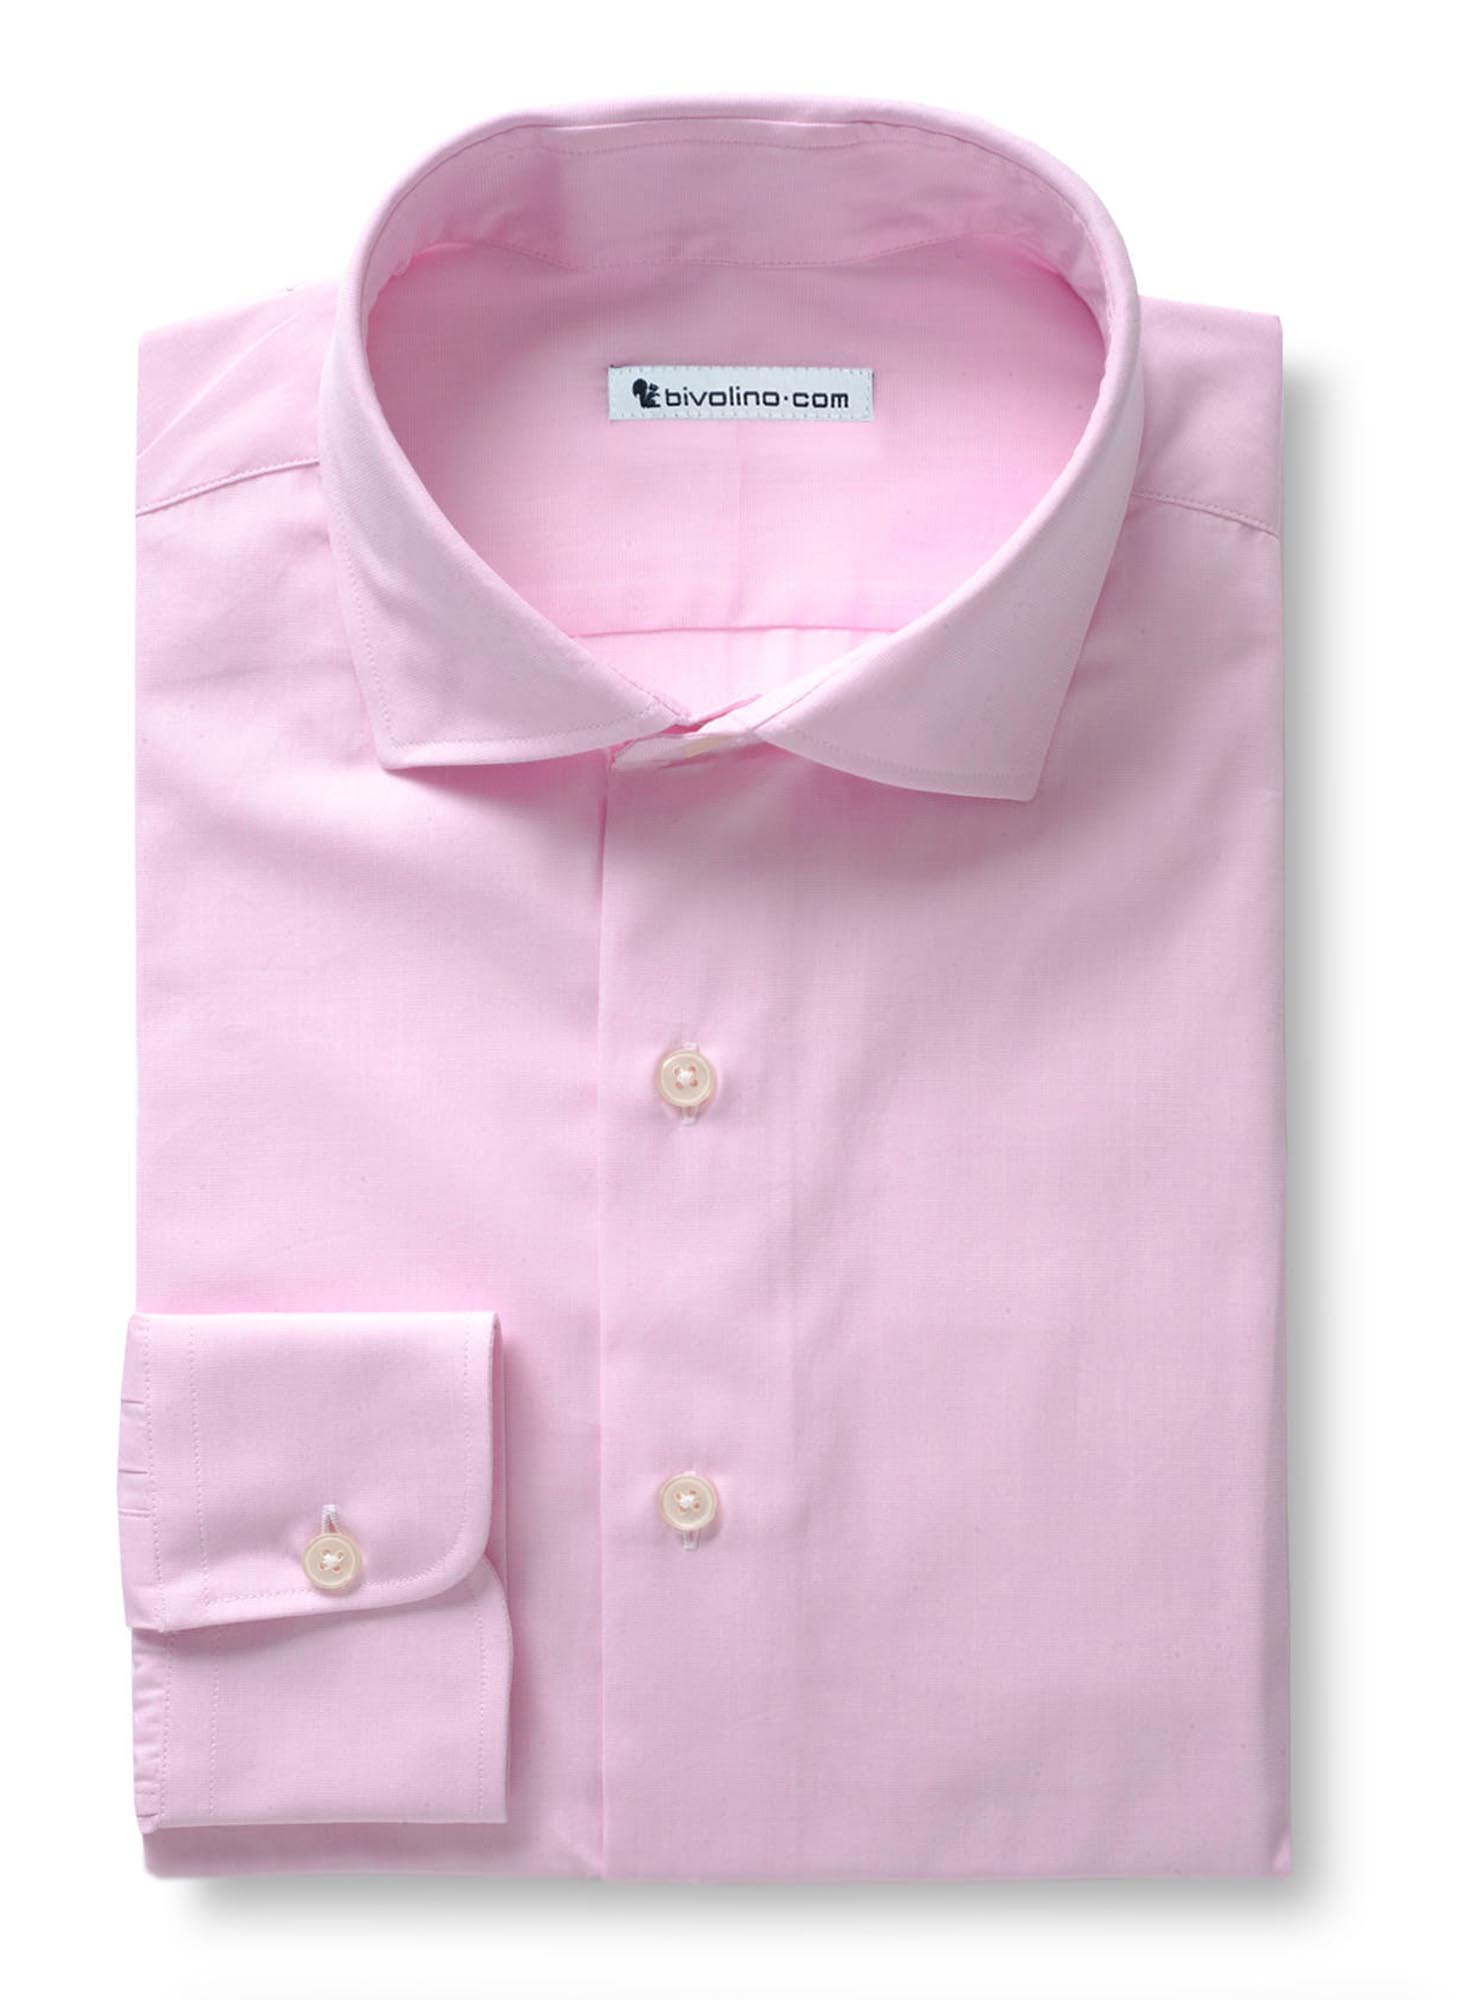 DONARILLO - Camisa de punta a punta rosa lisa - PARTY 5